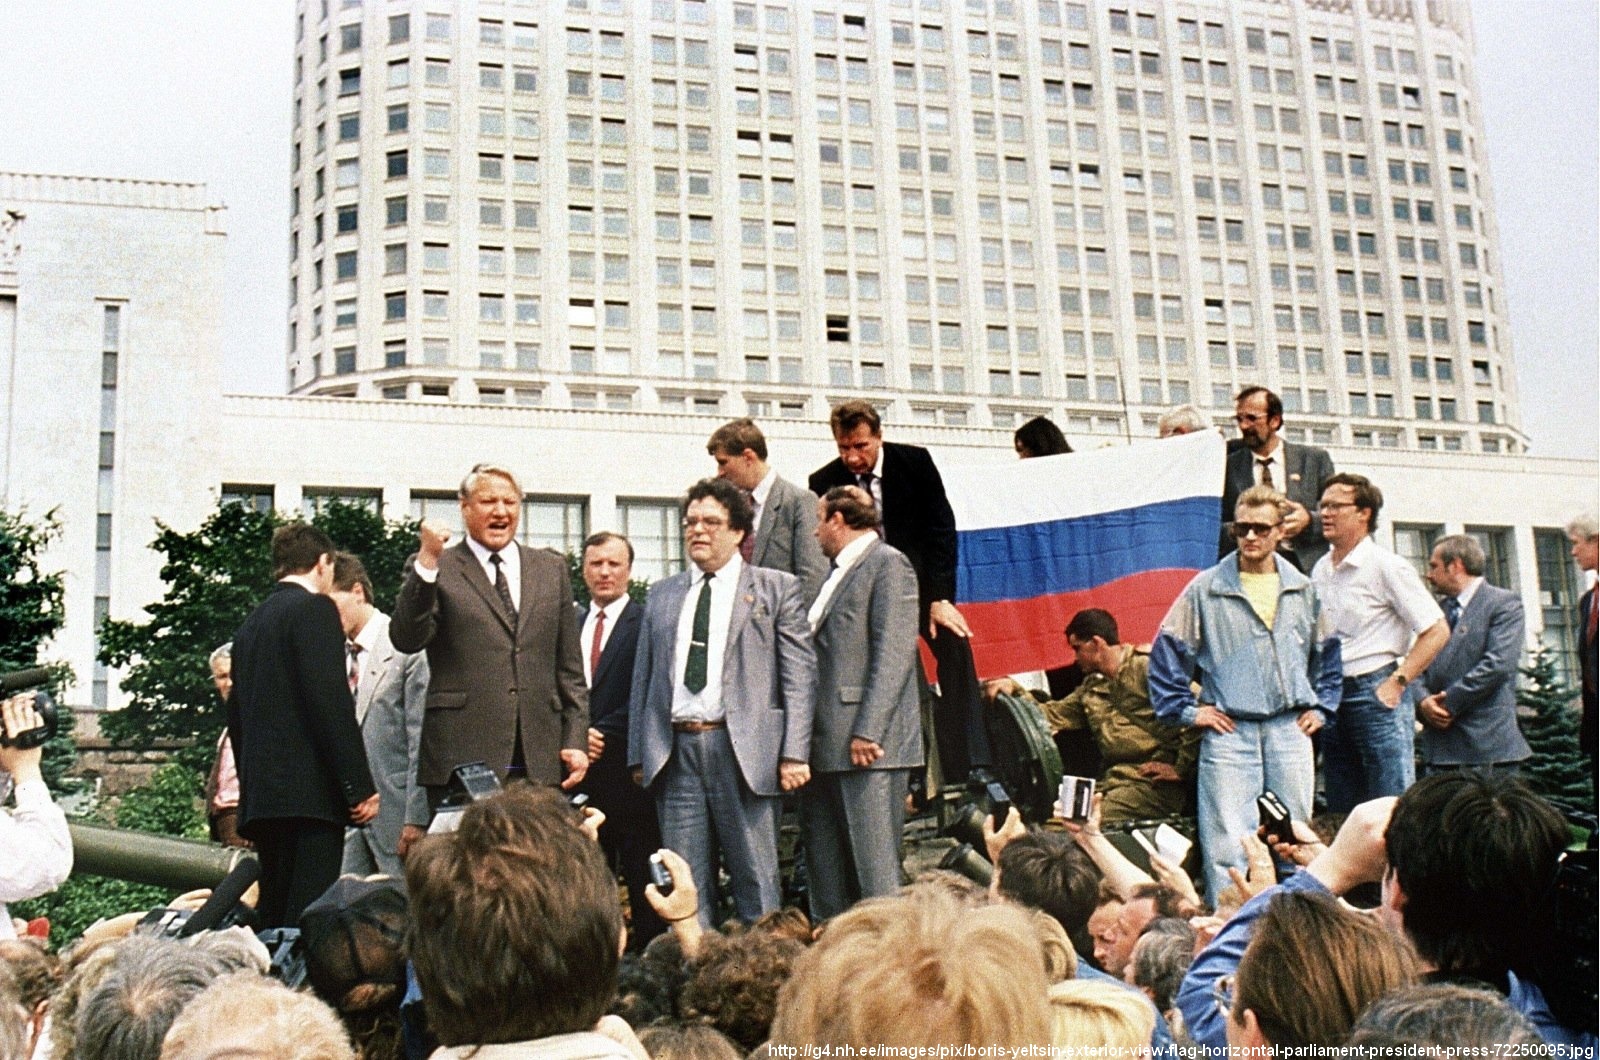 boris-yeltsin-exterior-view-flag-horizontal-parliament-president-press-72250095.jpg